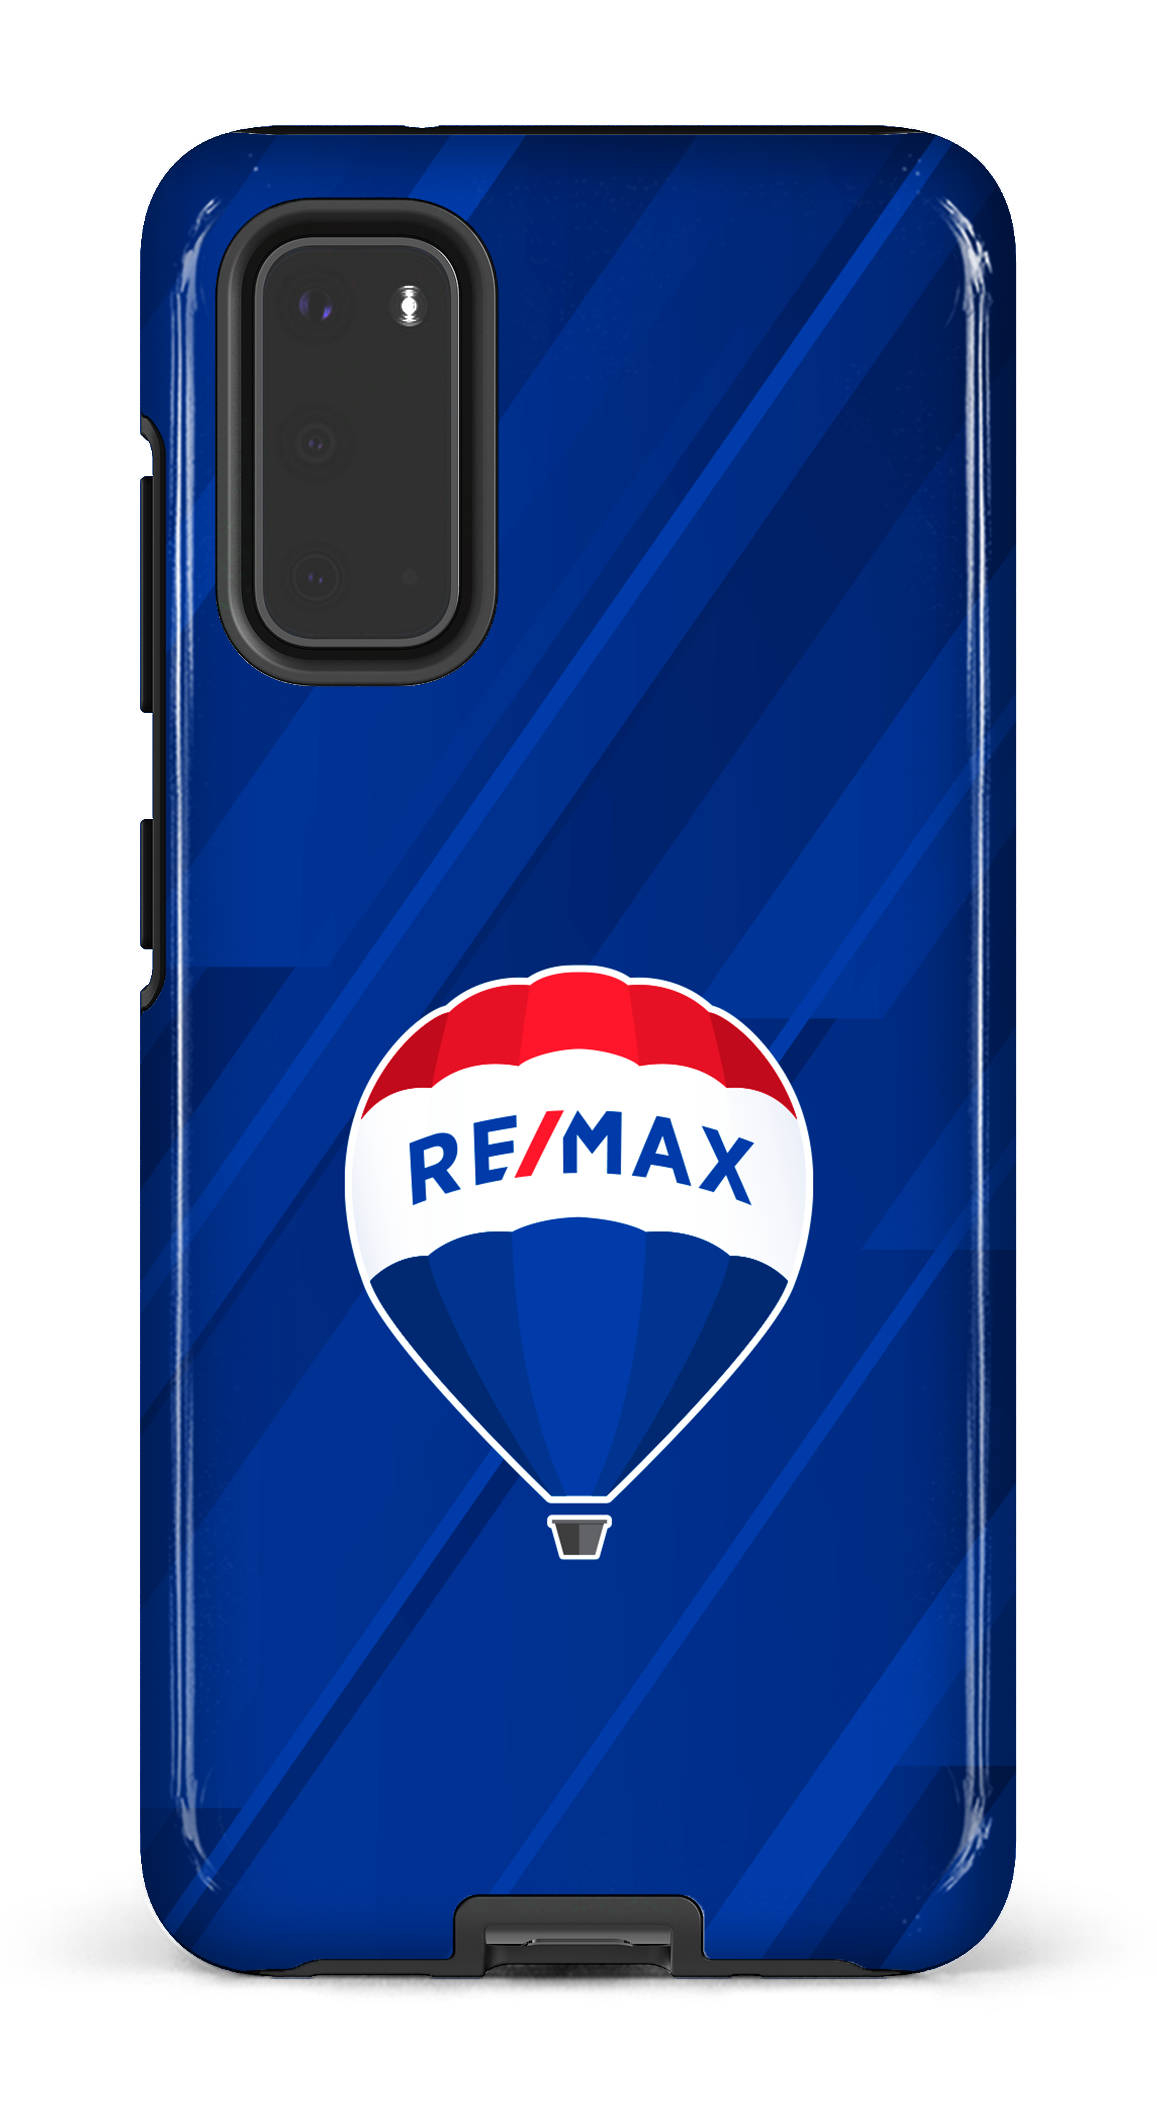 Remax Bleu - Galaxy S20